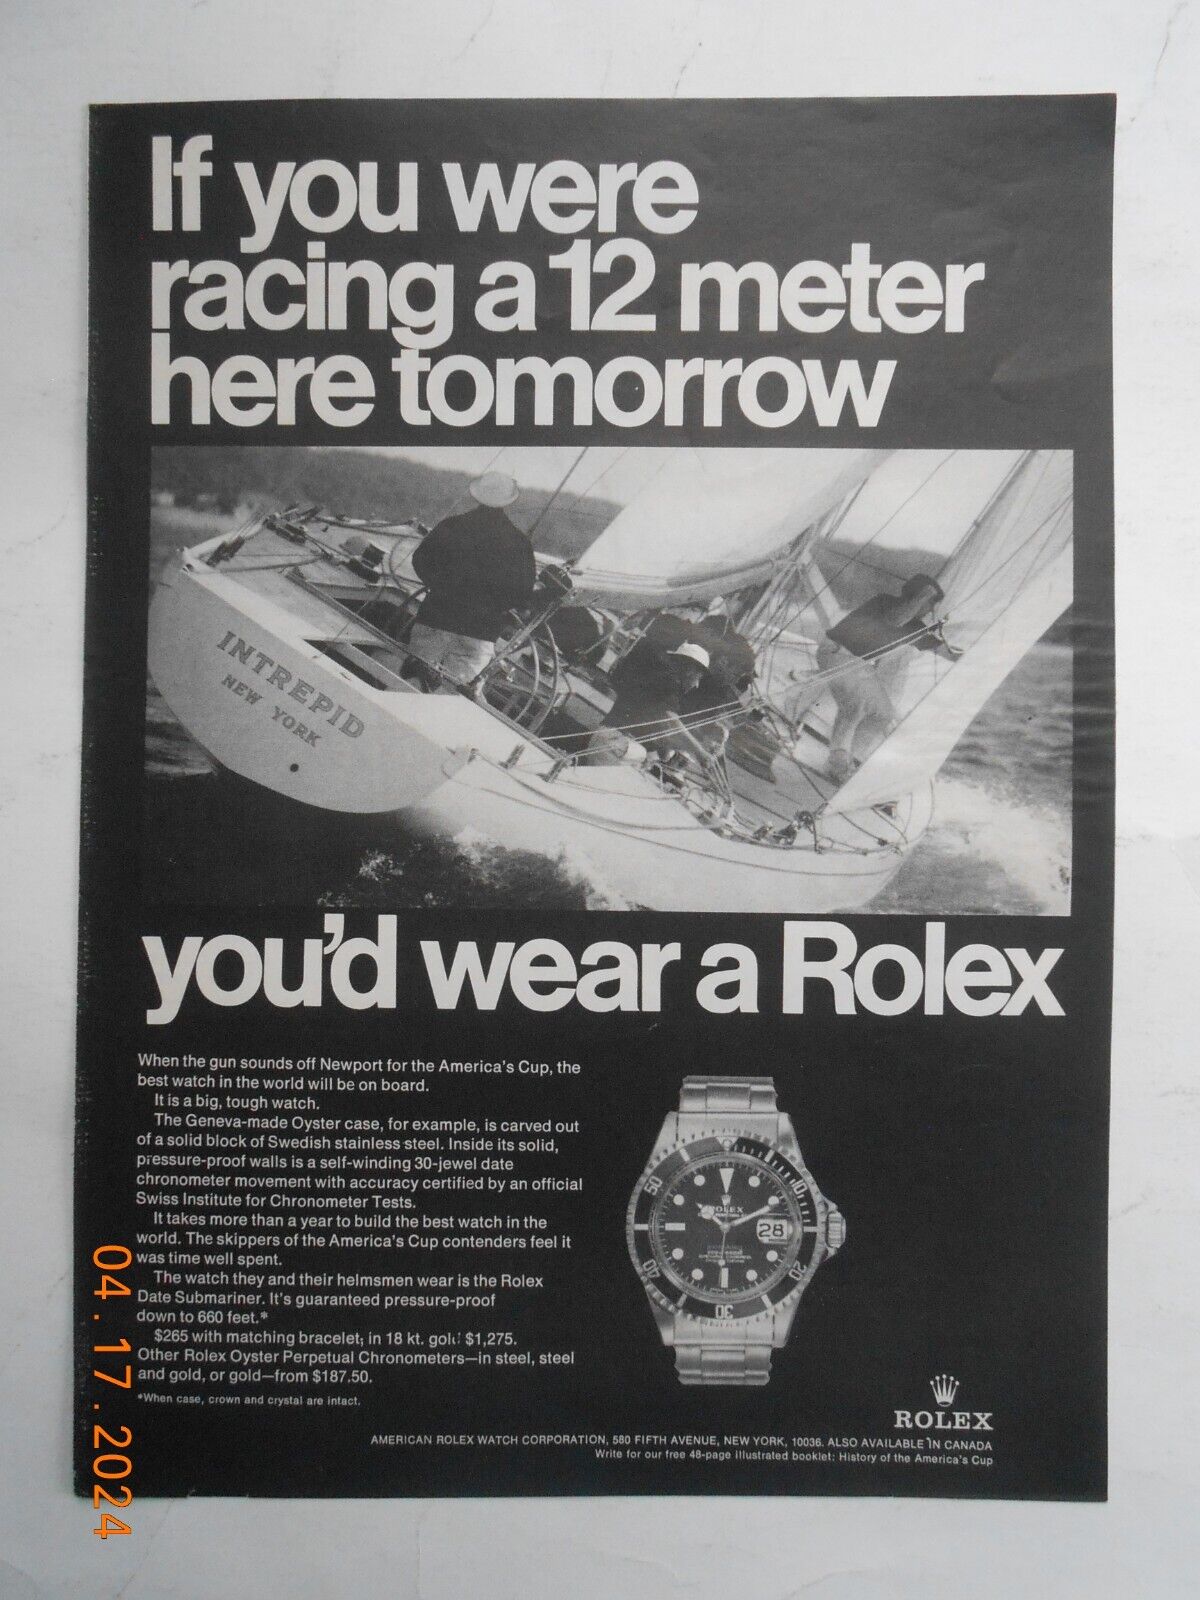 1970 Rolex Submariner watch PRINT AD  America's Cup yacht Intrepid photo vintage